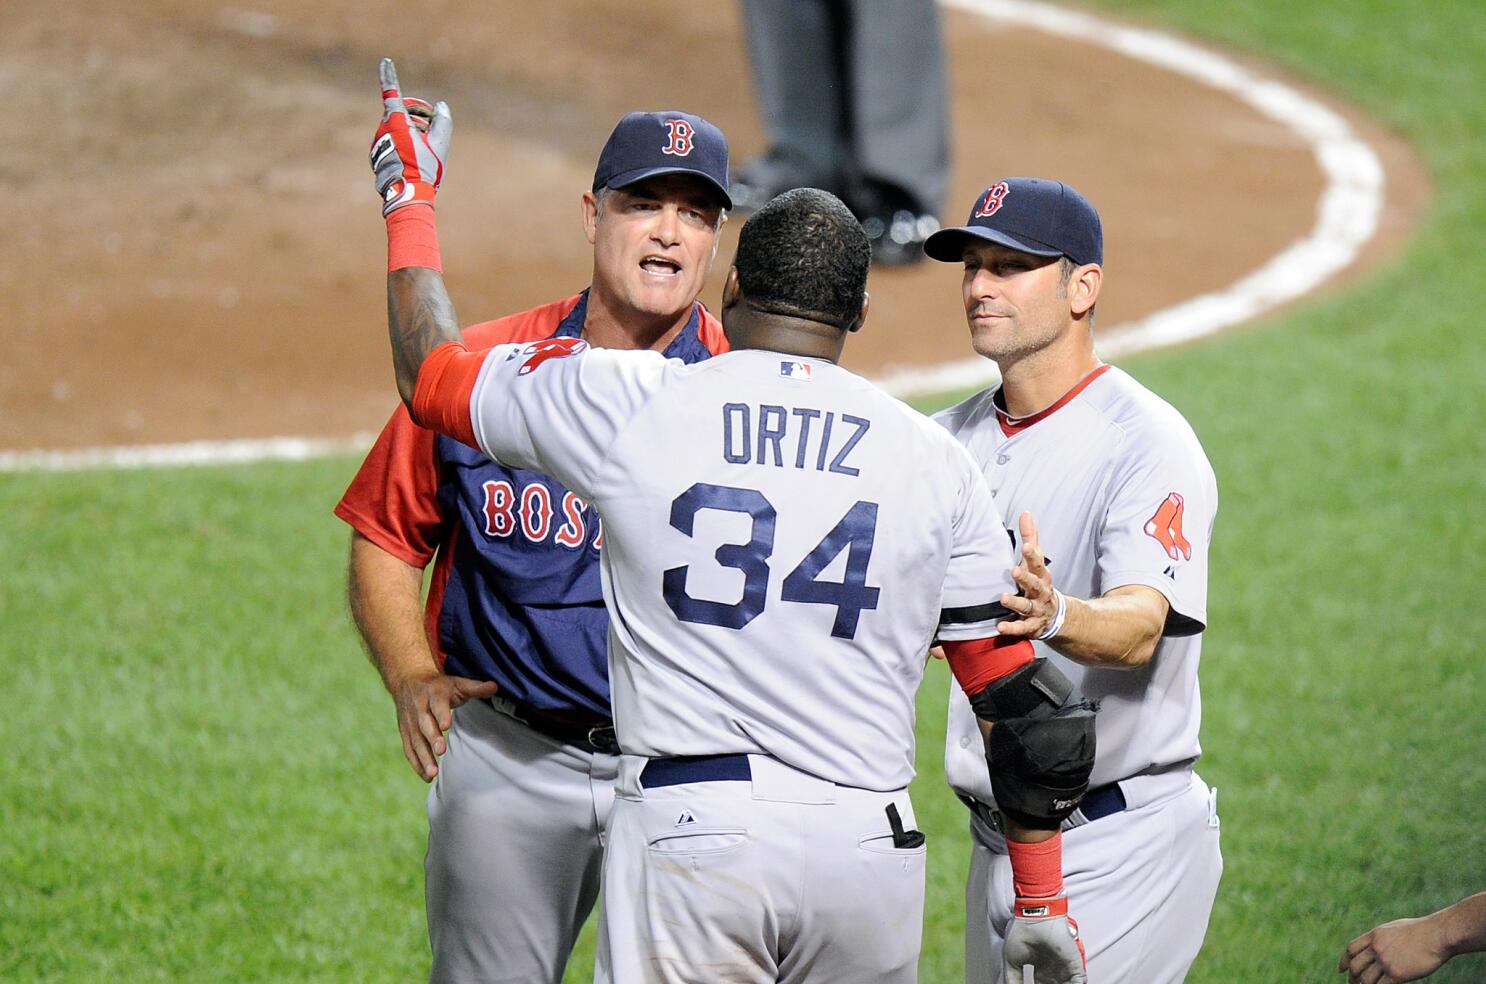 September 30, 2016: David Ortiz hits 541st and final home run of